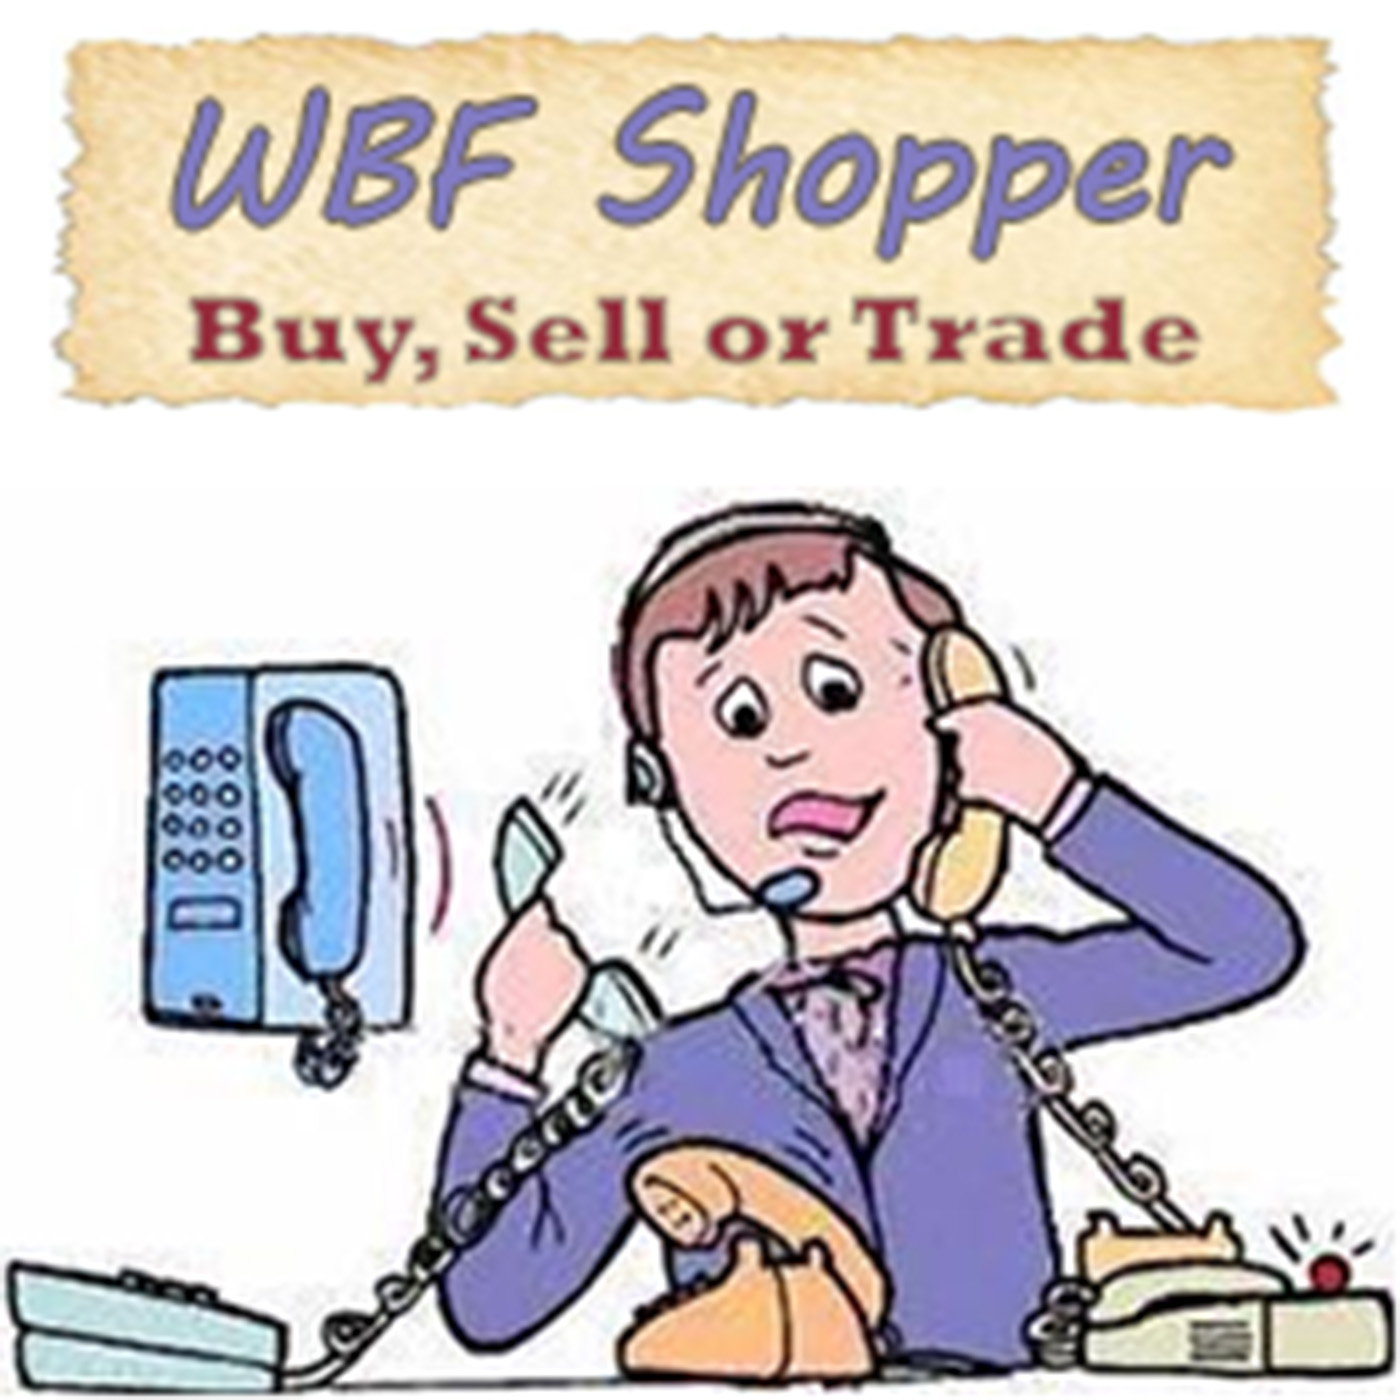 The WBF Shopper on FM 102.9